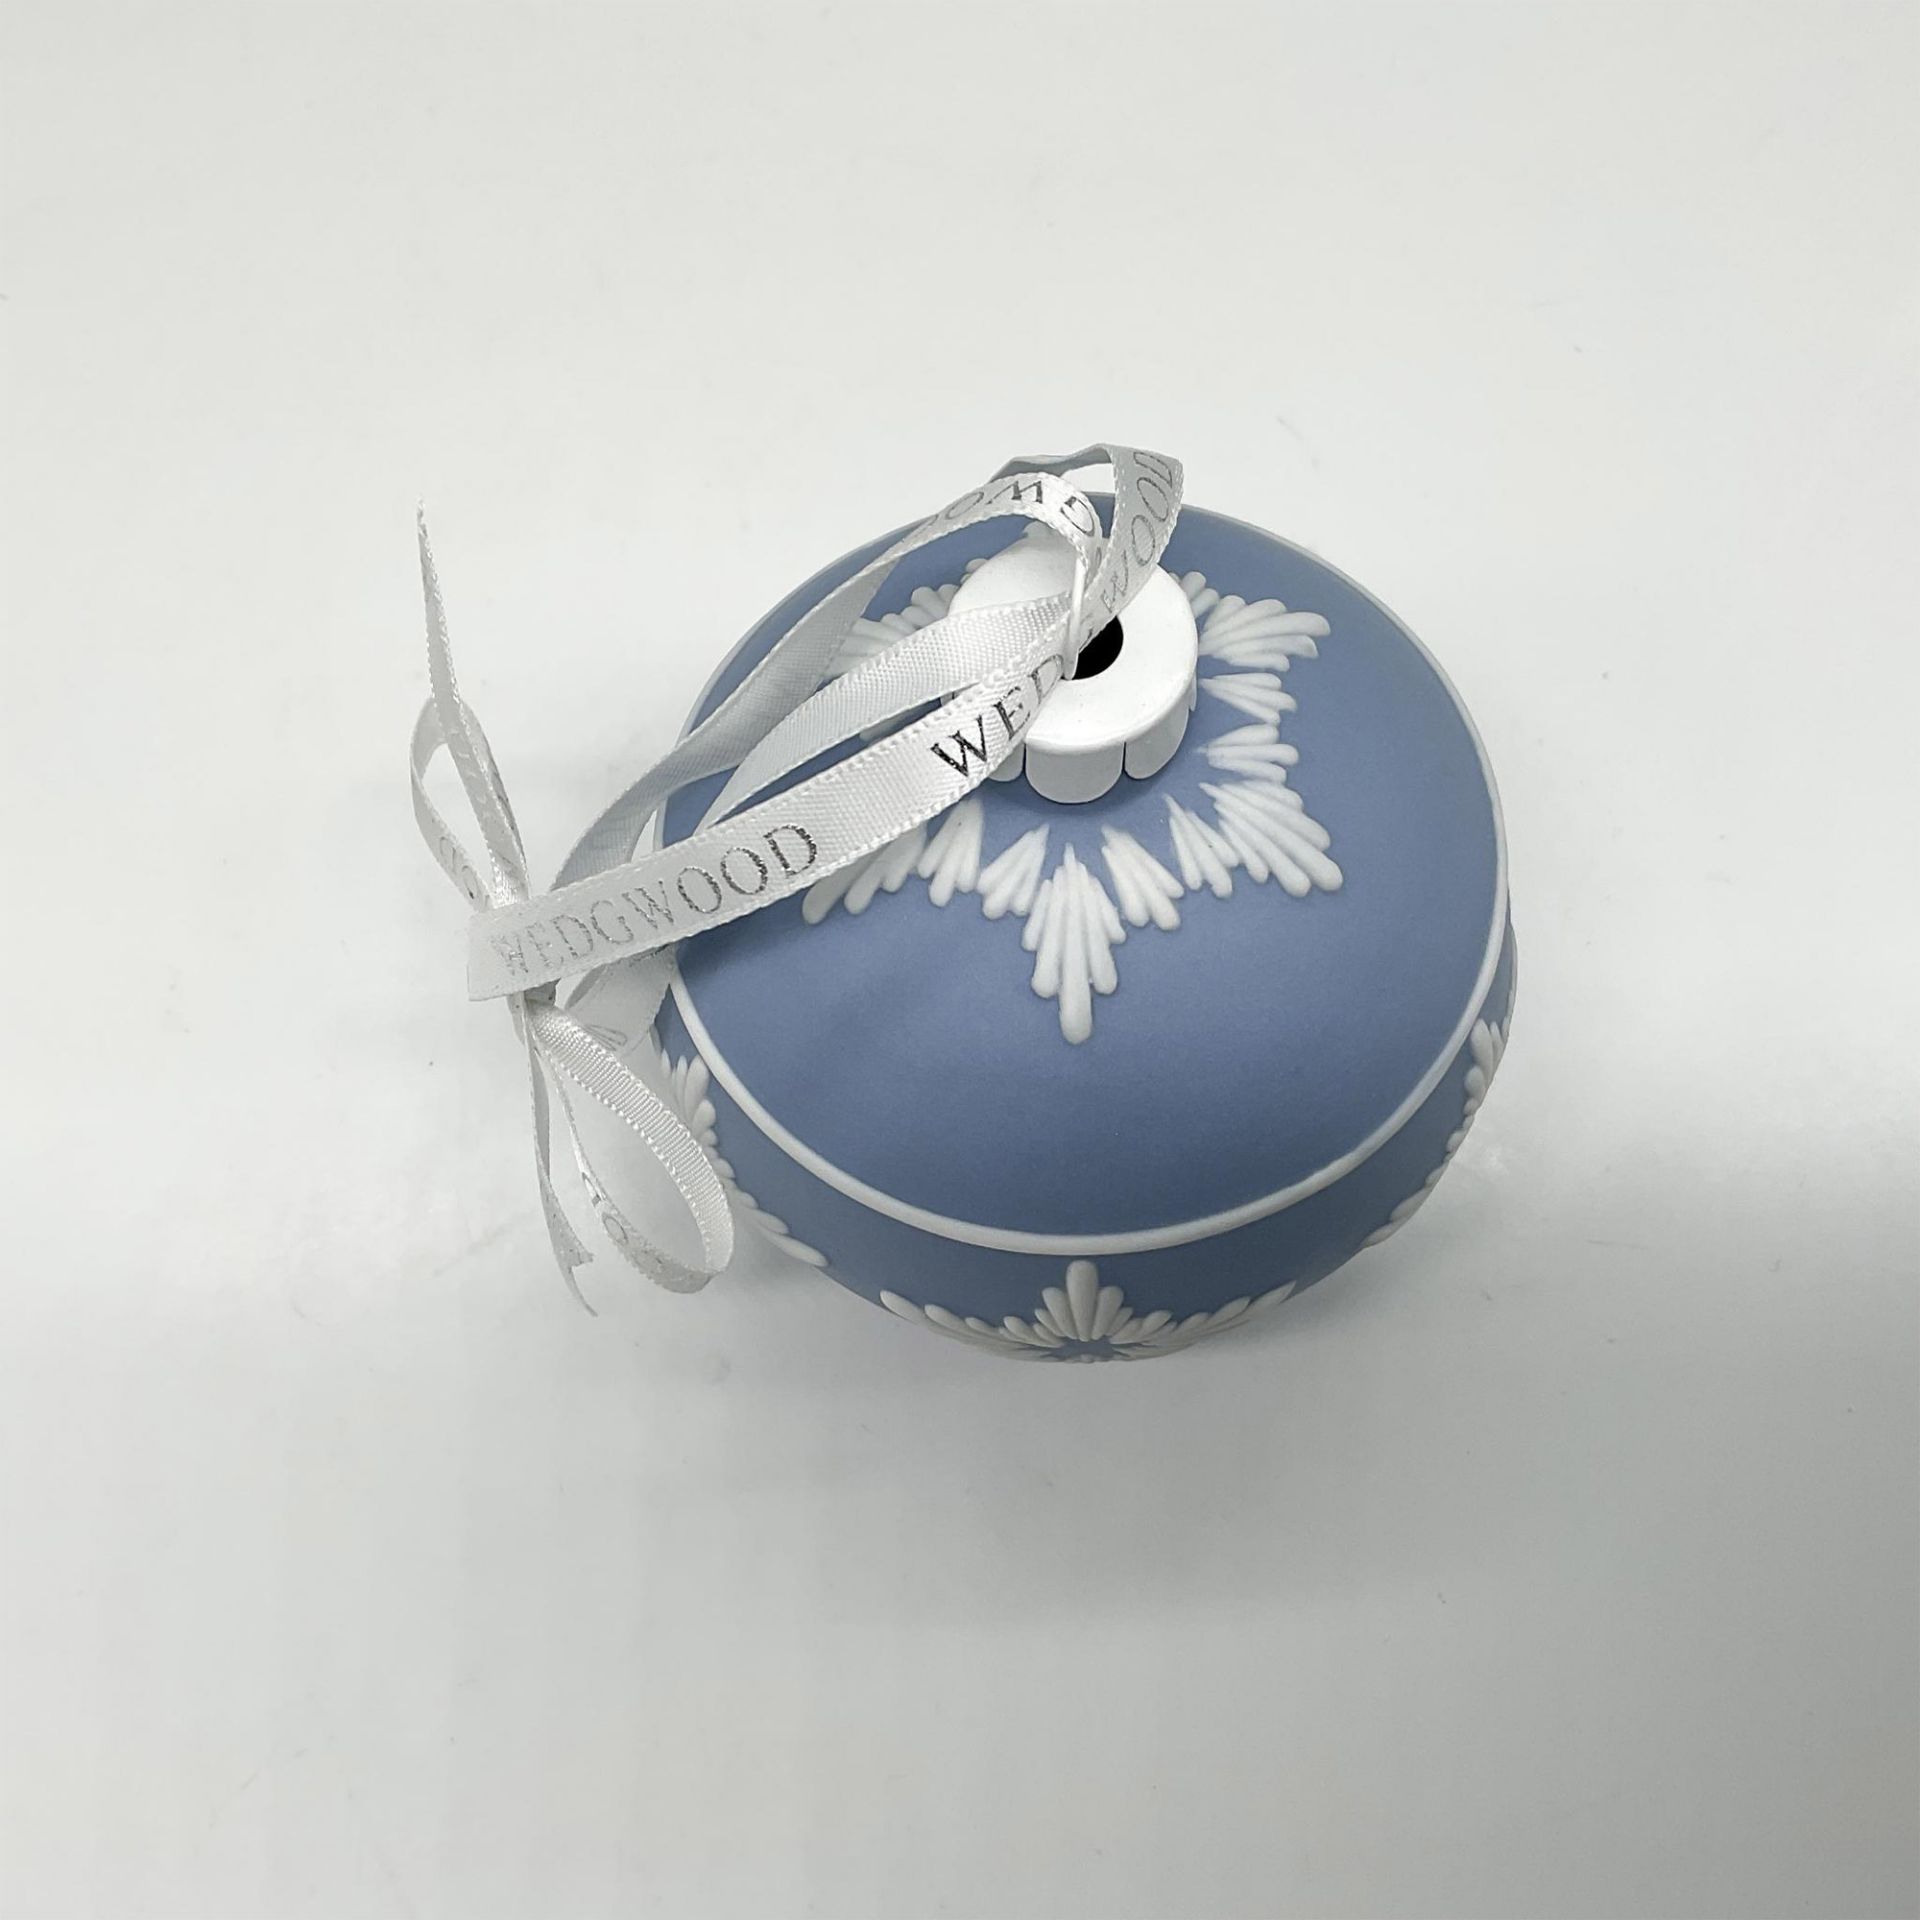 Wedgwood Porcelain Tree Ornament, Snowflake - Image 2 of 3